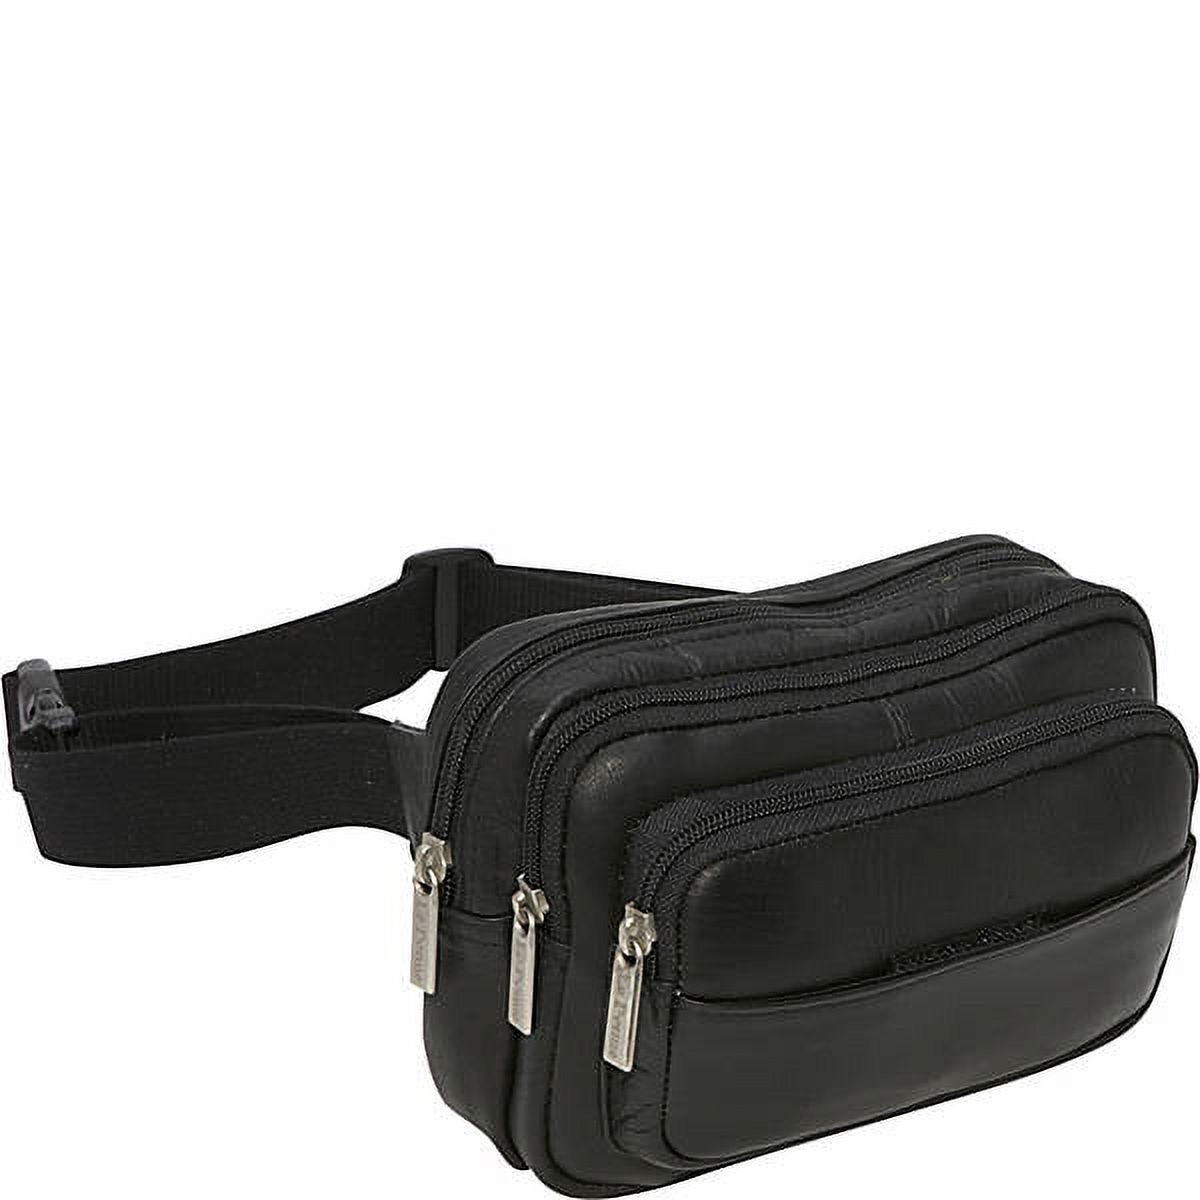 Le Donne Leather Four Compartment Waist Bag LD-9114 - image 1 of 4